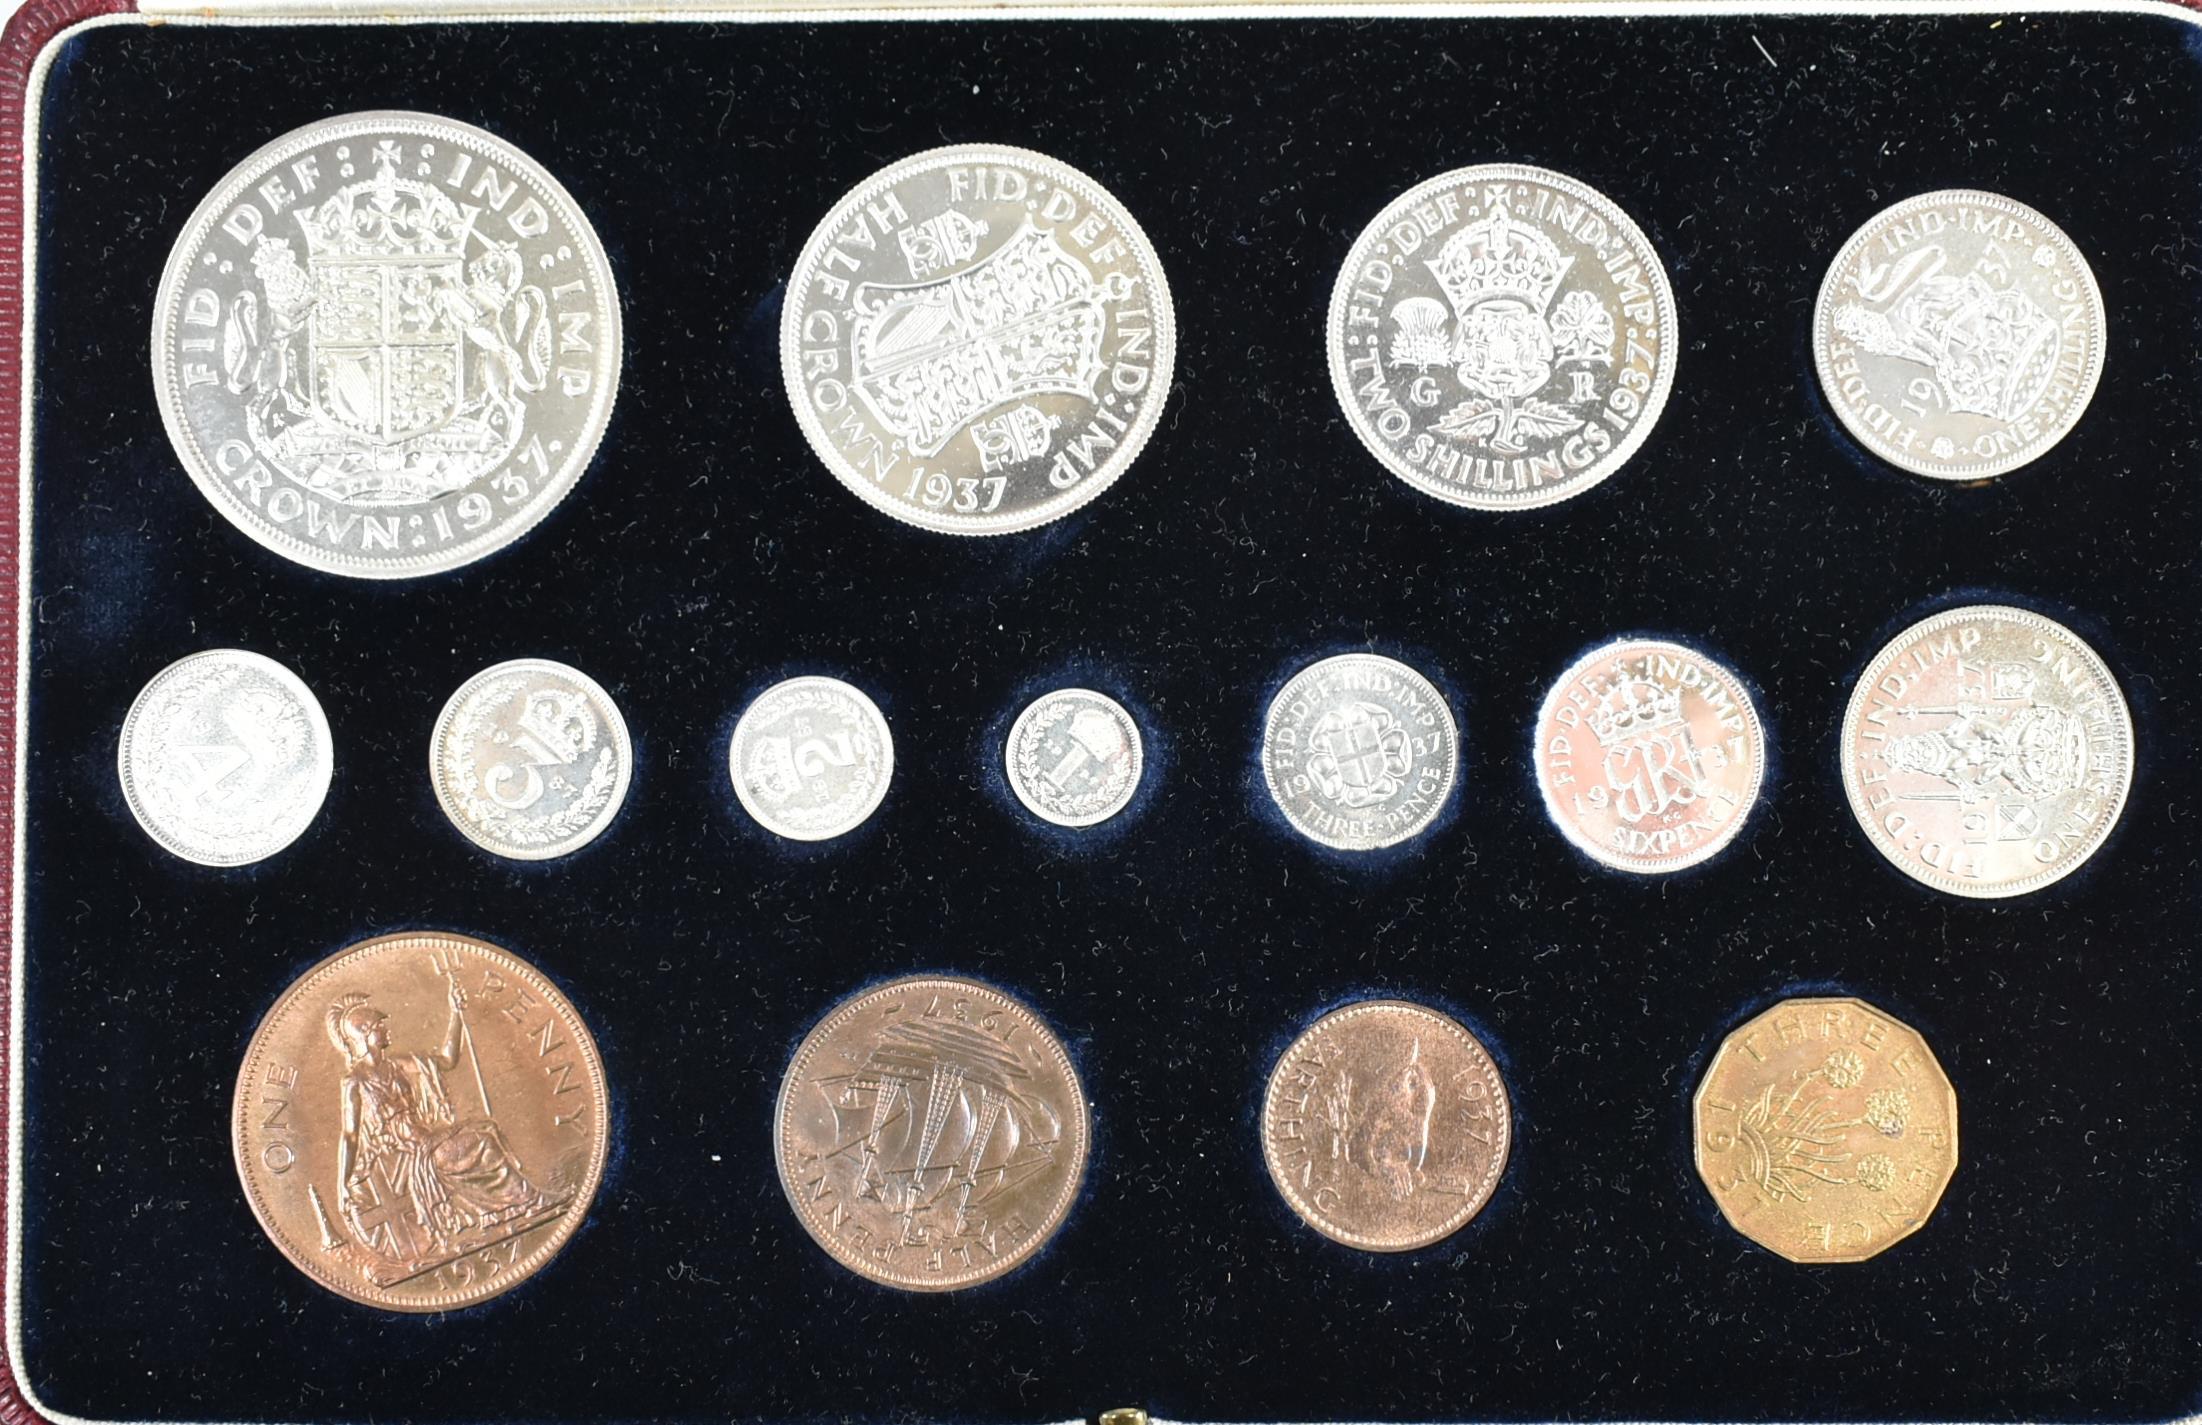 1937 - 15 PROOF SPECIMEN COINS SET IN LEATHER CASE - Image 2 of 4